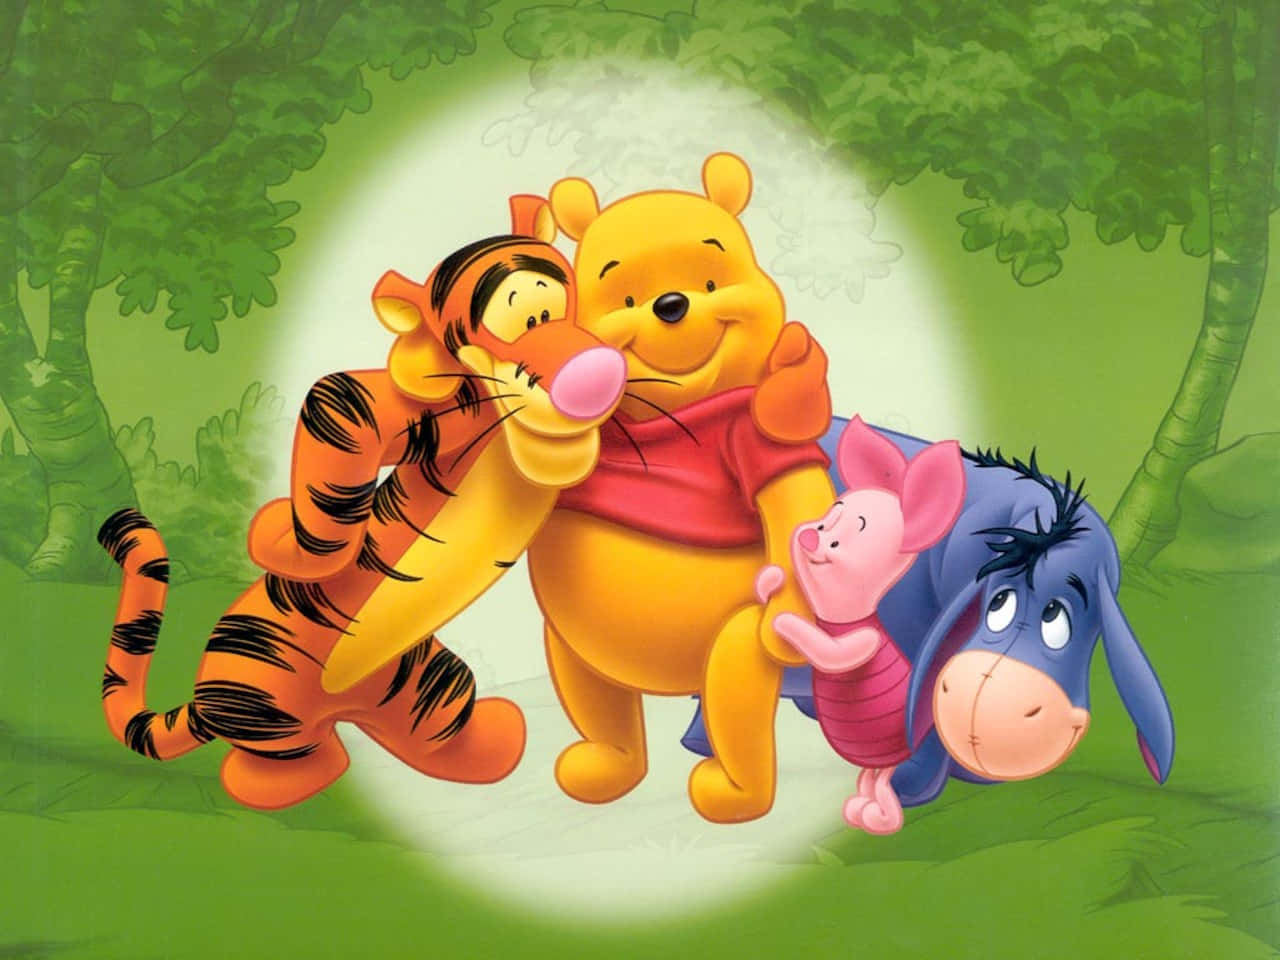 Winnie the Pooh and Eeyore Enjoy a Stroll Through the Autumn Woods